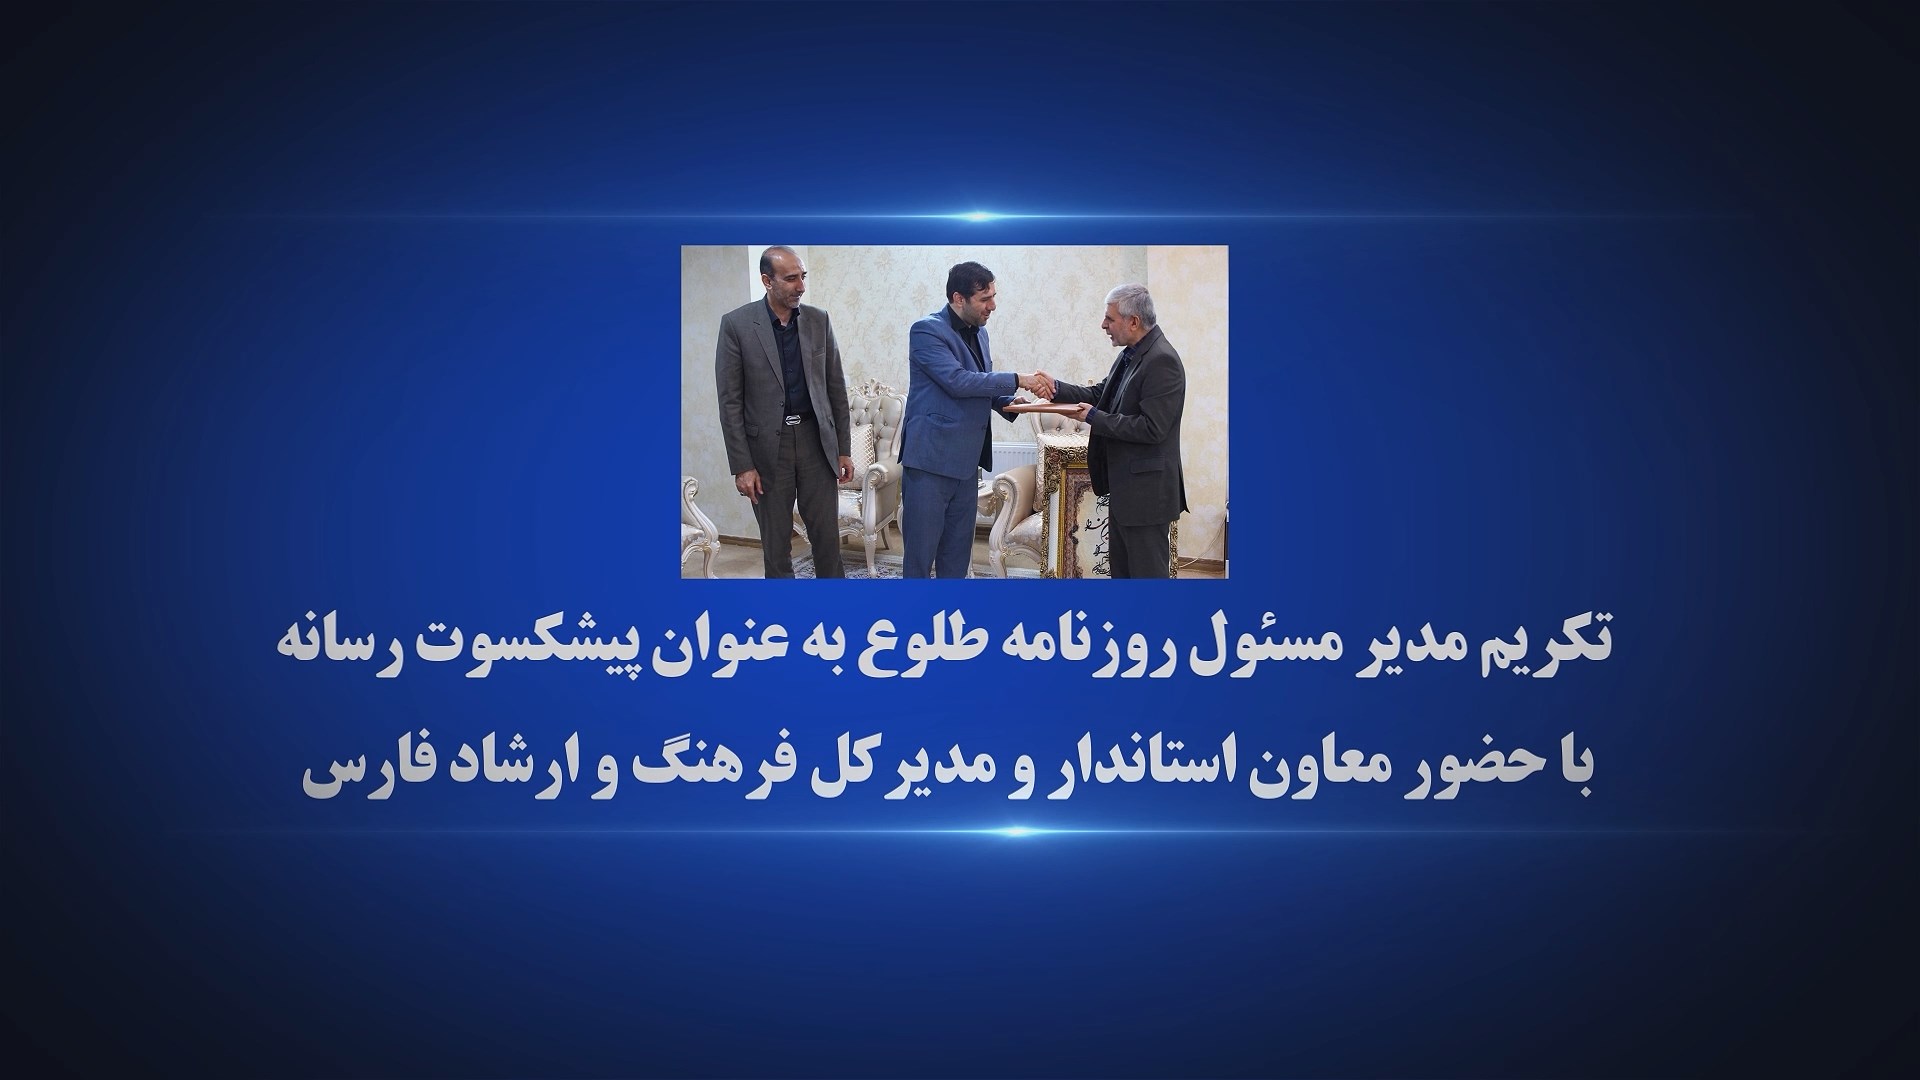 desتکریم مدیرمسئول روزنامه طلوع به عنوان پیشکسوت مطبوعات استان